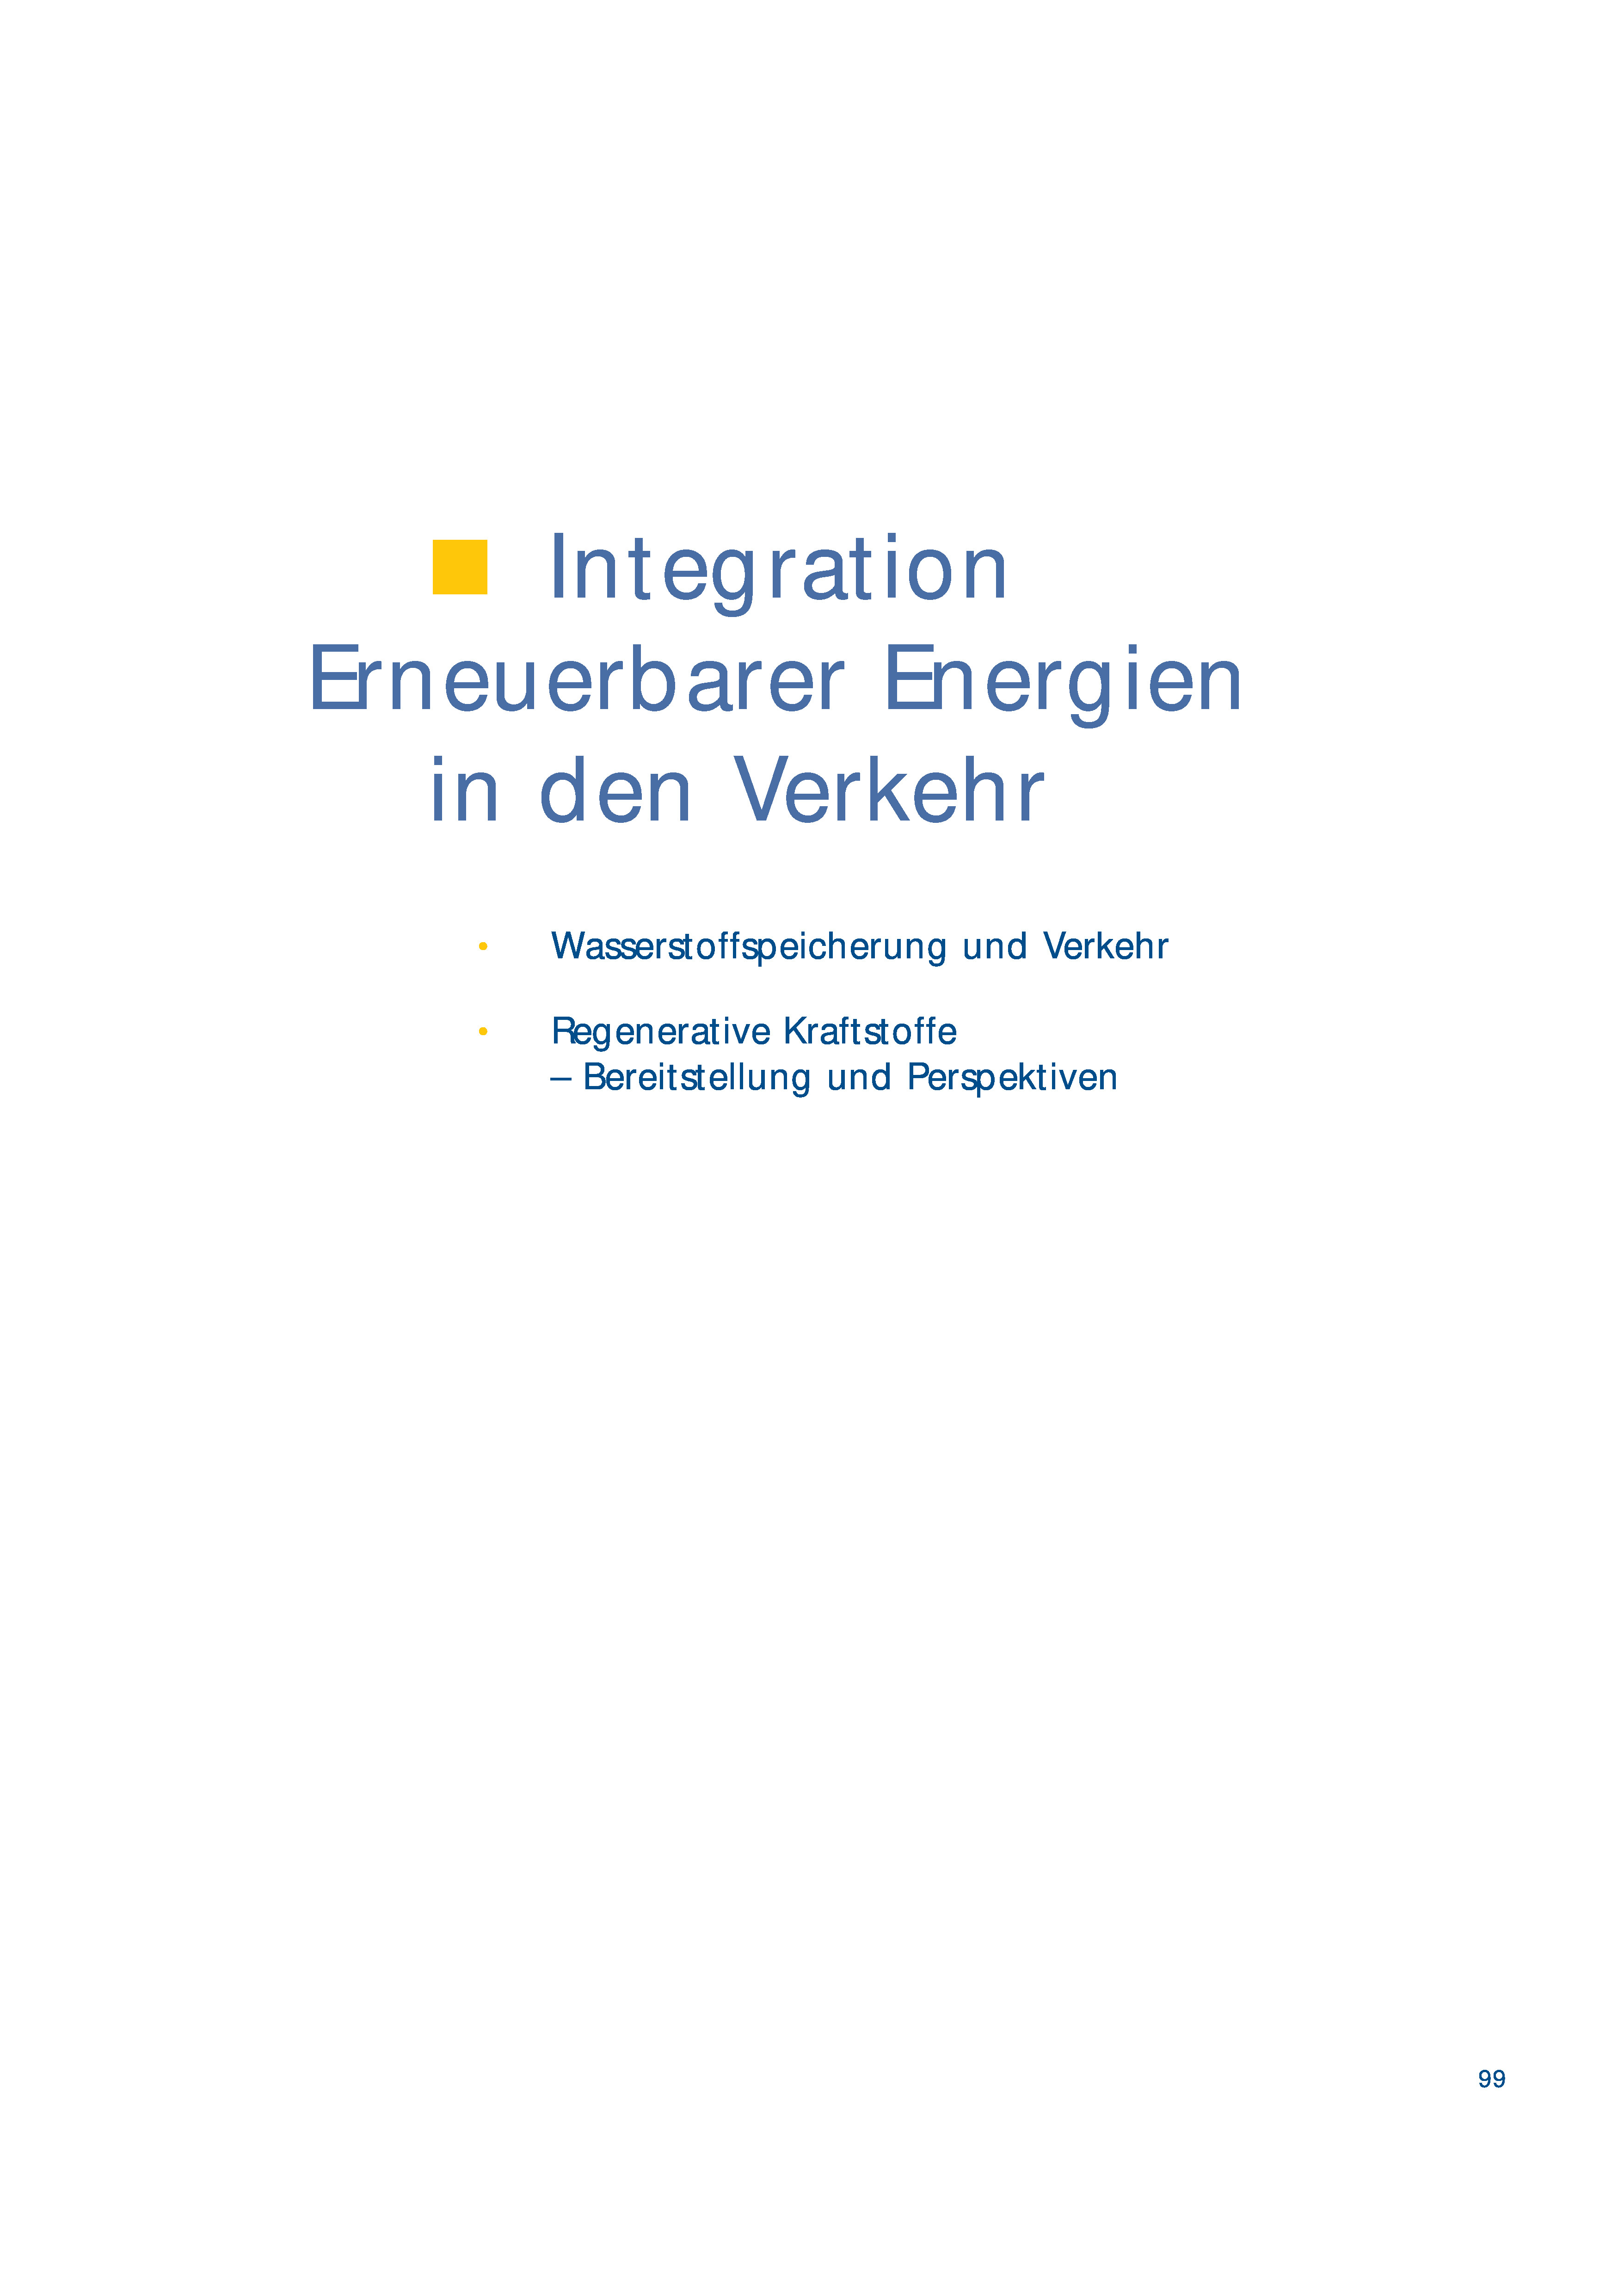 Themen 2001: Integration erneuerbarer Energien